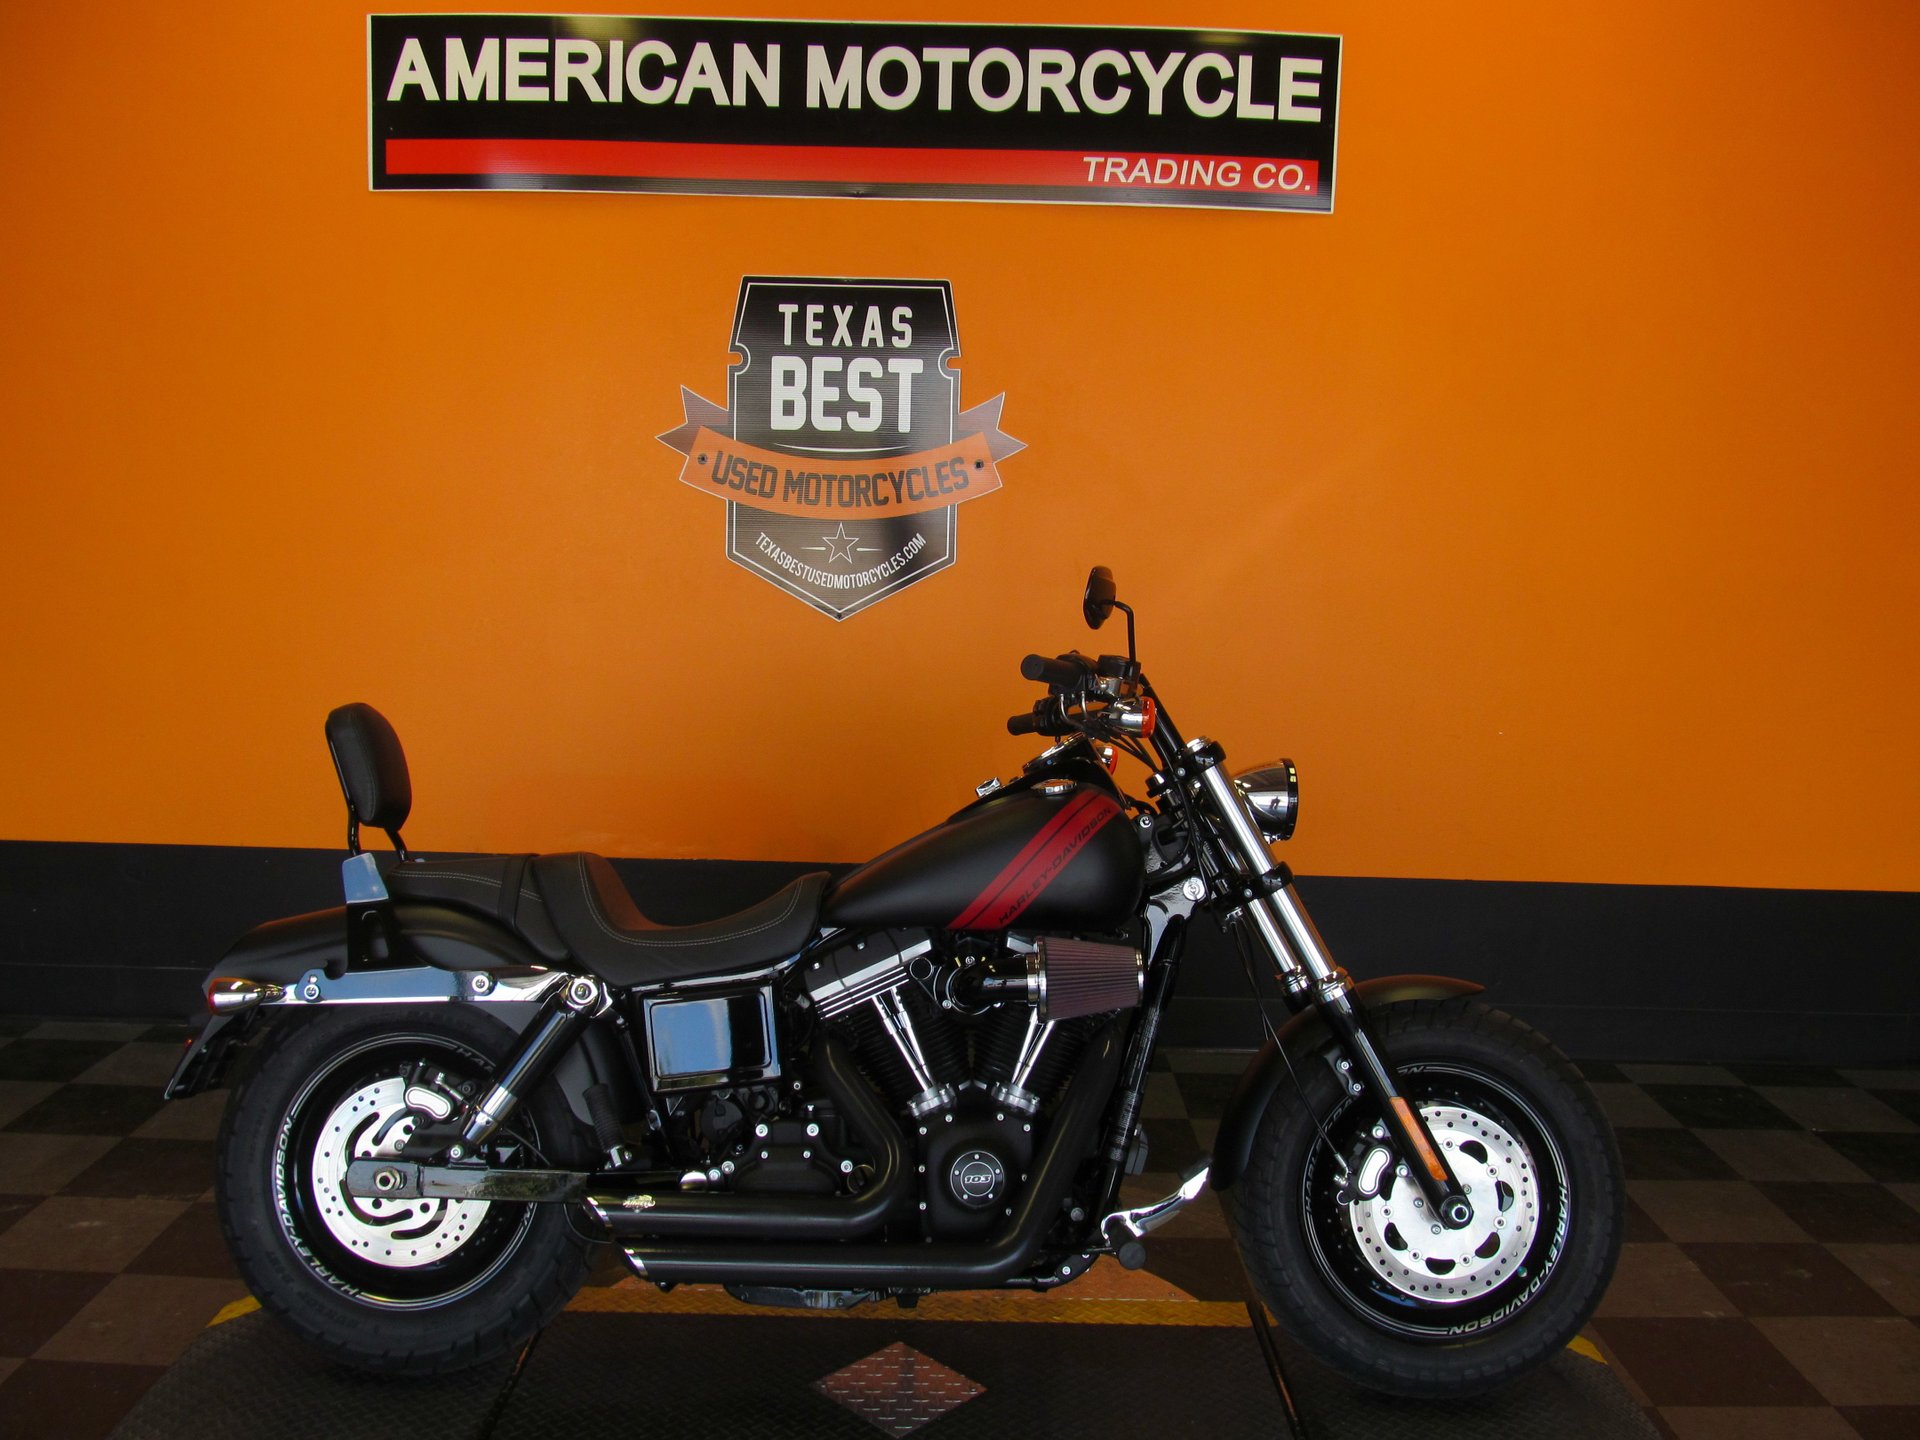 2014 Harley-Davidson Dyna Fat Bob | American Motorcycle Trading Company -  Used Harley Davidson Motorcycles